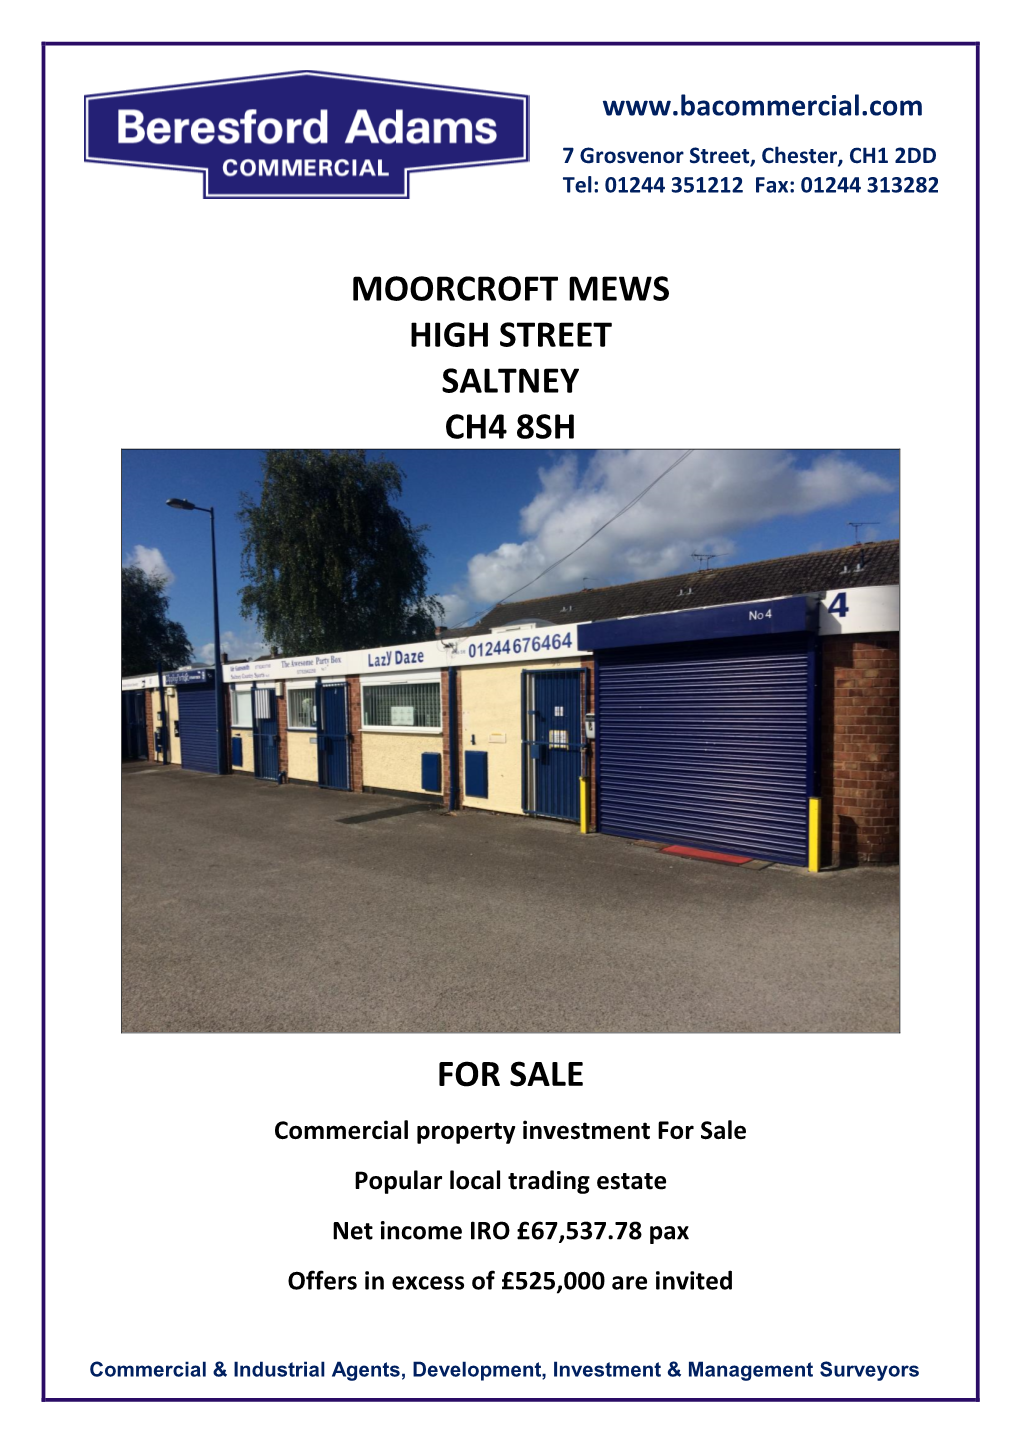 Moorcroft Mews High Street Saltney Ch4 8Sh for Sale